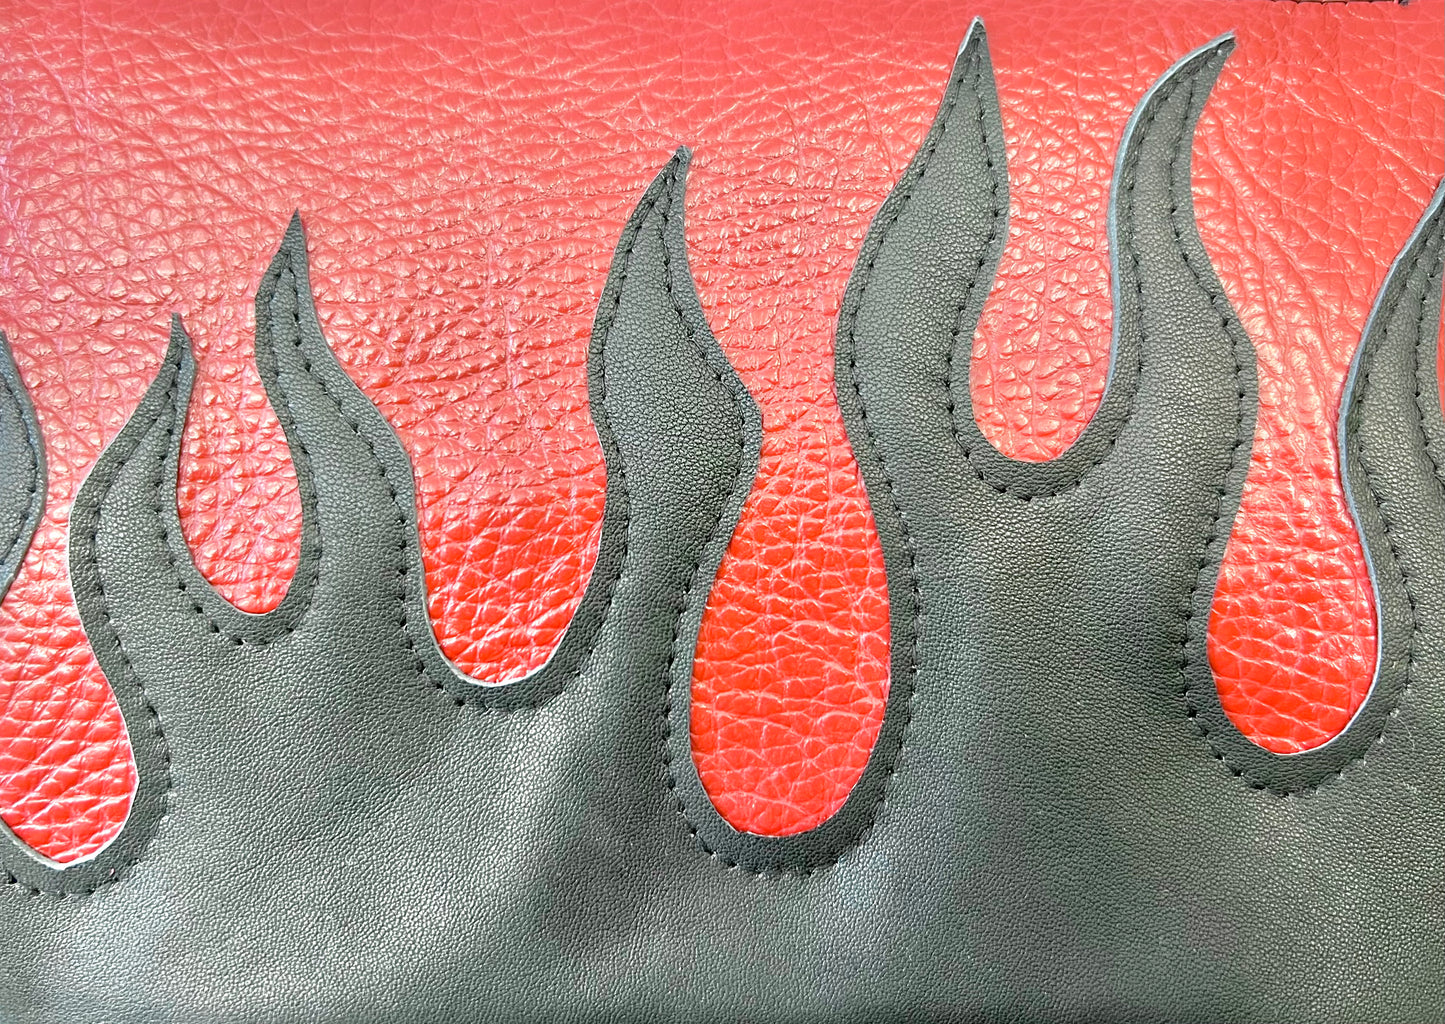 Red Italian Leather Clutch w/ Flame Appliqué